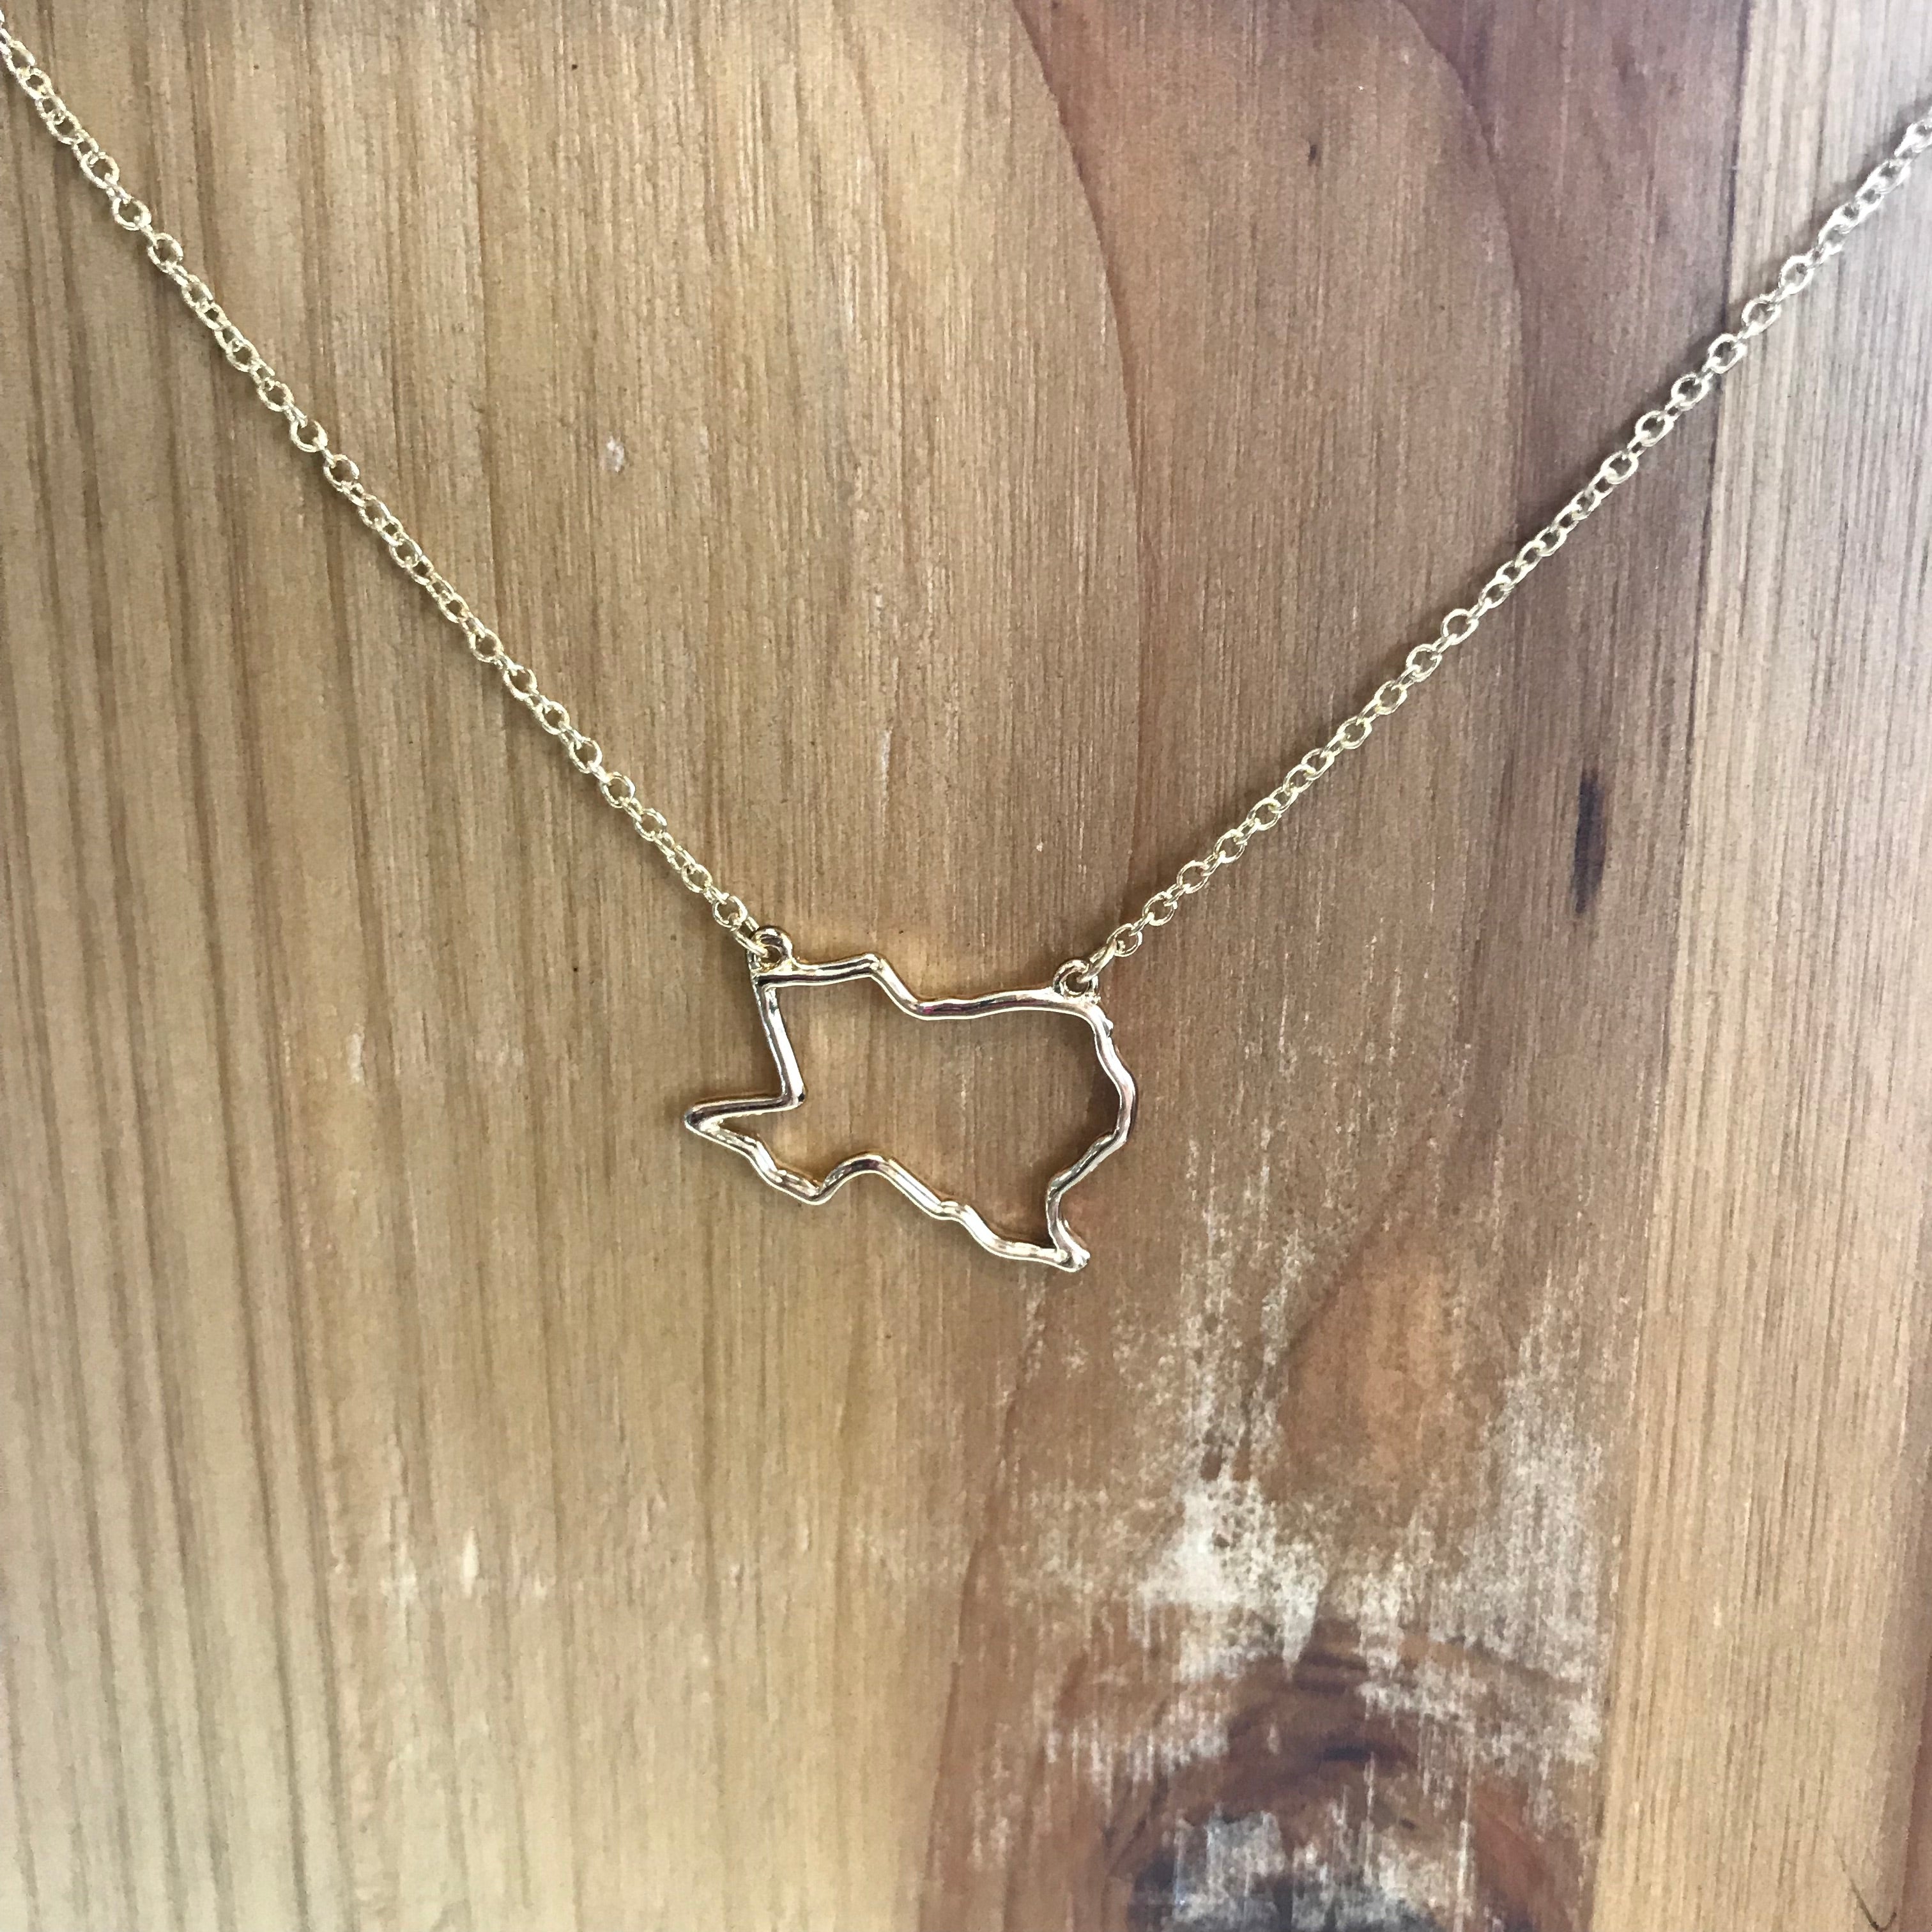 Jewelry, Texas shape charm on gold chain